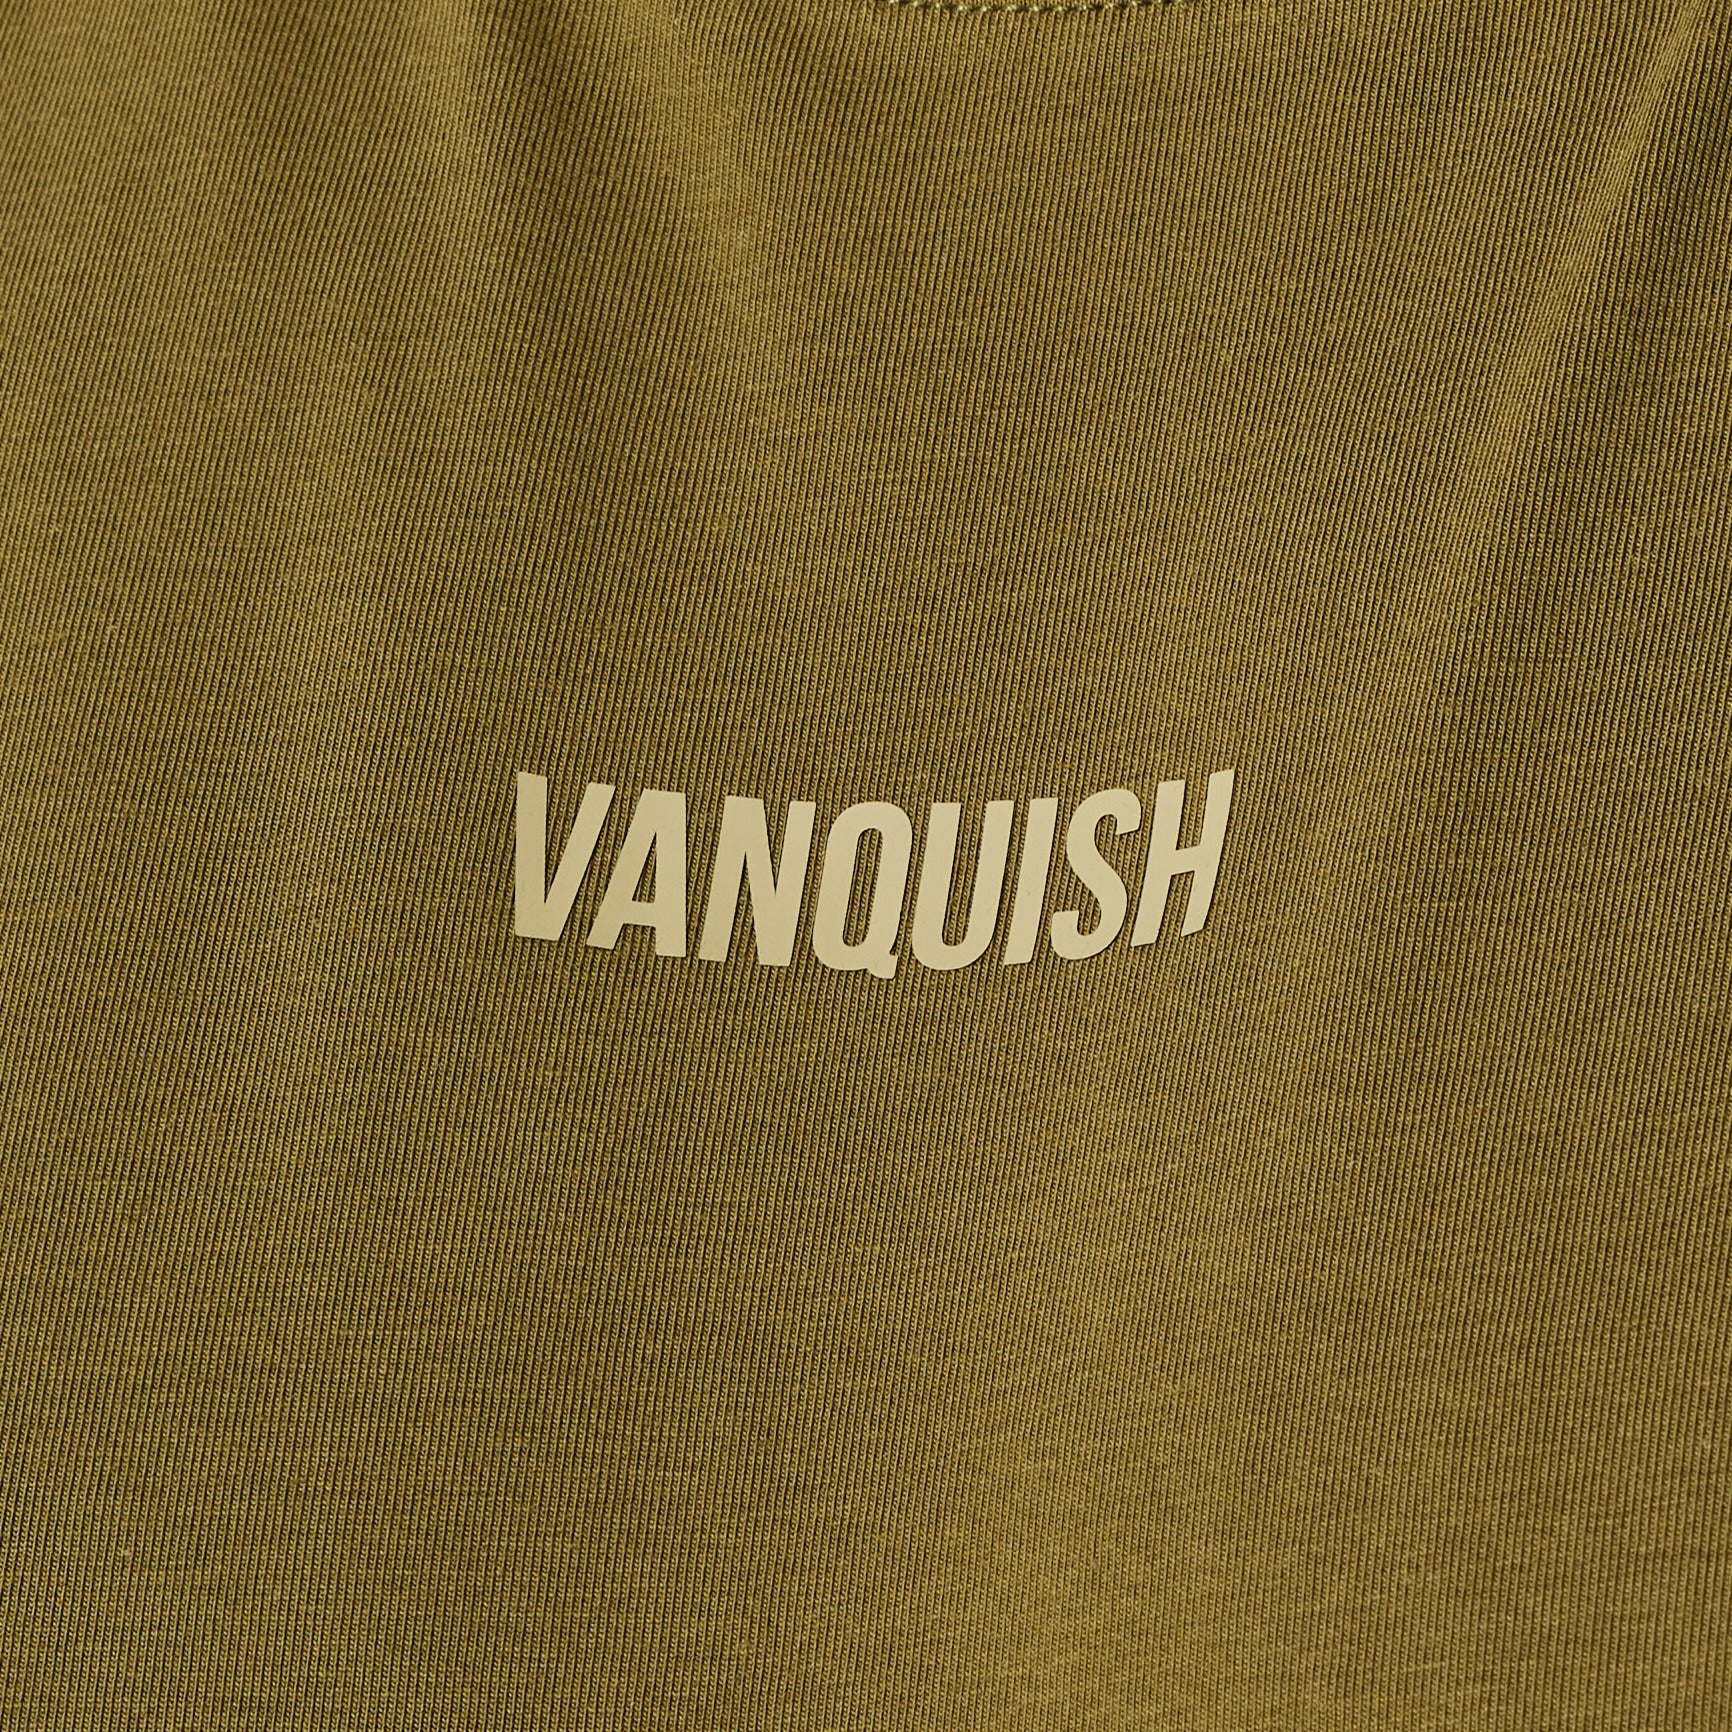 Vanquish – Essential – Übergroßes, ärmelloses T-Shirt in Olivgrün